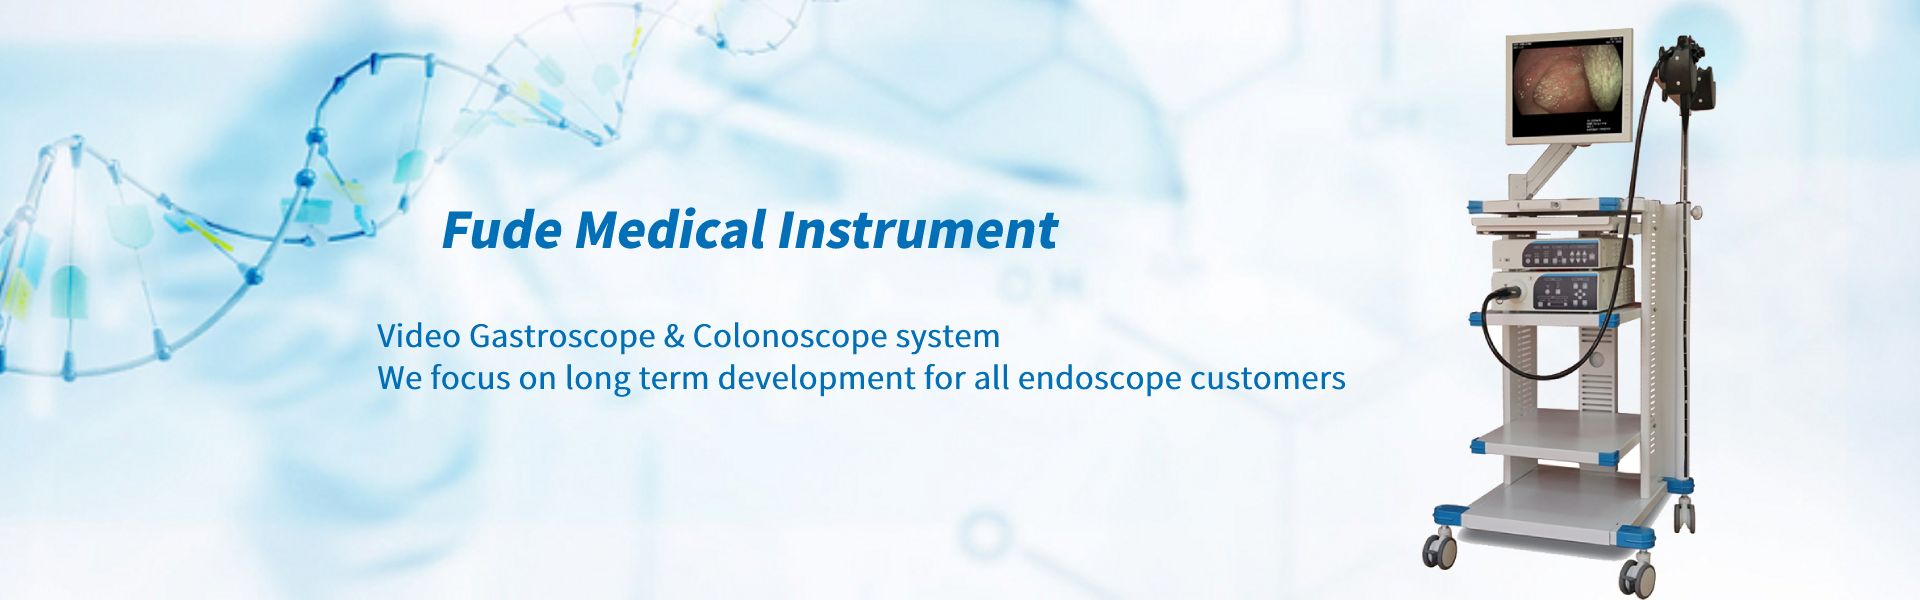 Video gastroscope & colonoscope system